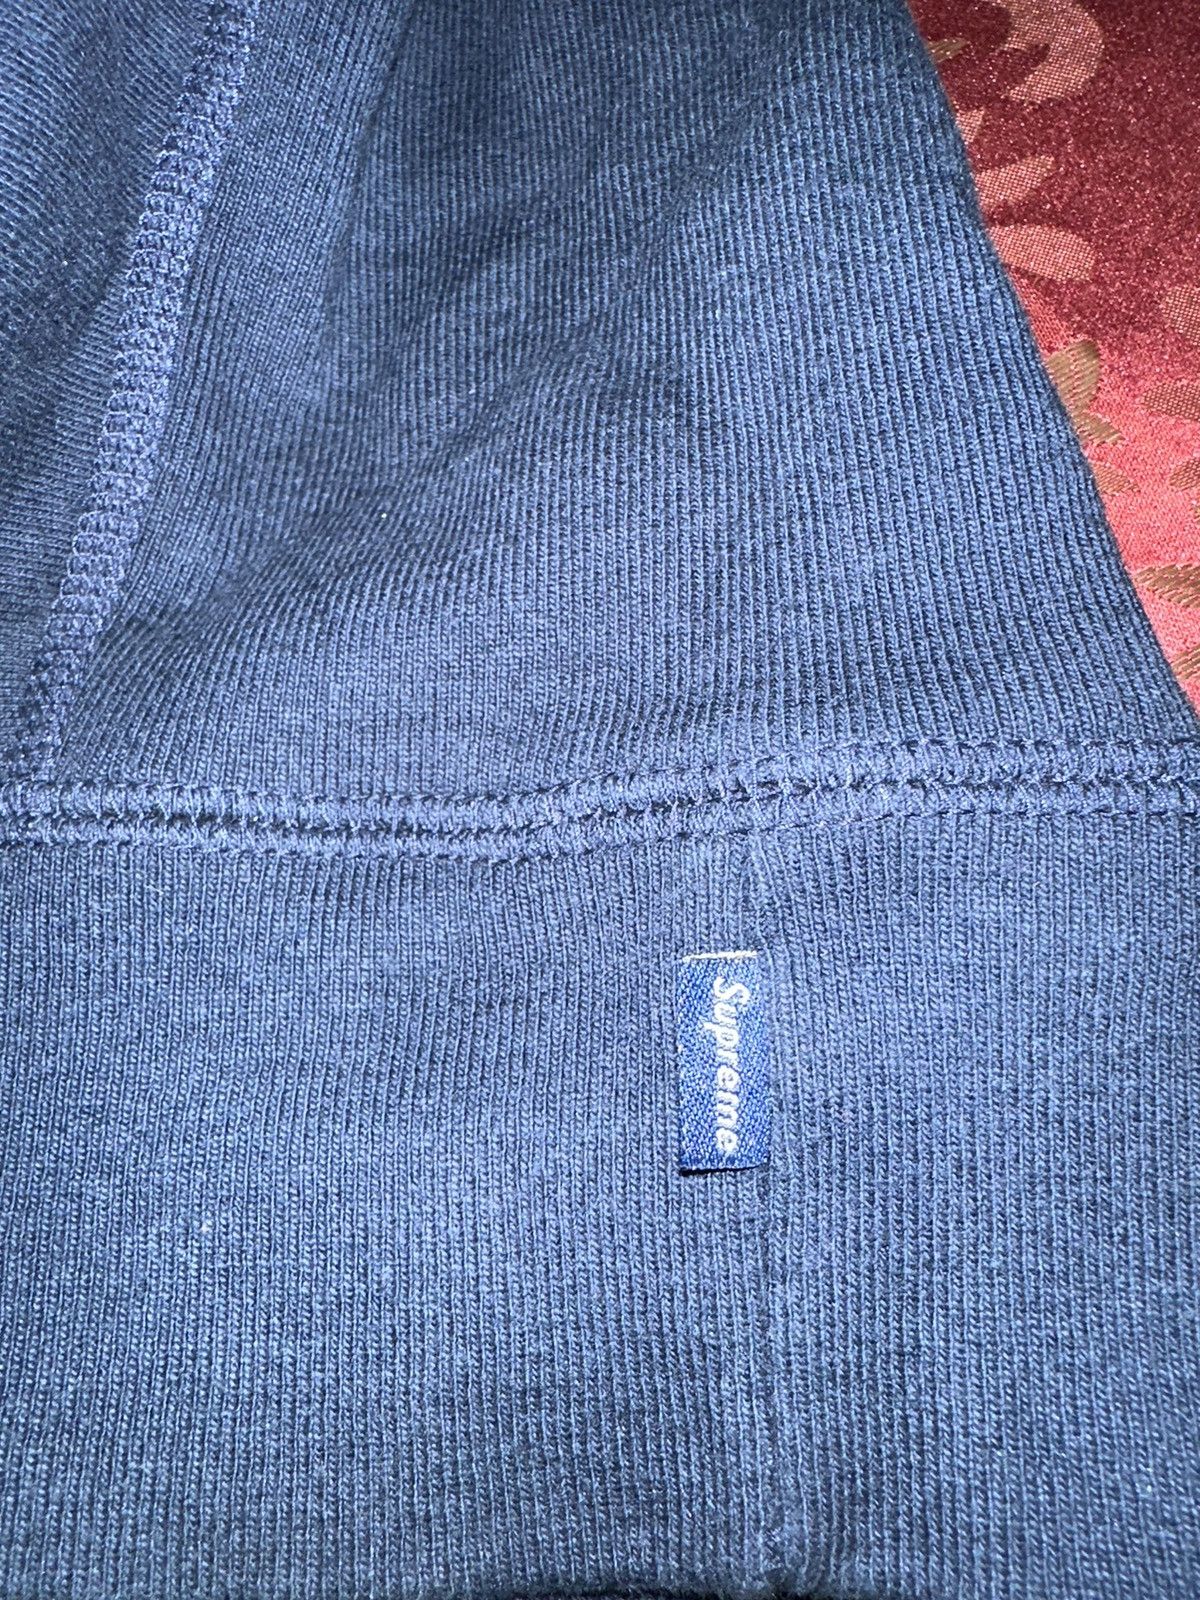 Supreme Supreme Bandana Box Logo Hooded Sweatshirt Navy Blue Large Size US L / EU 52-54 / 3 - 8 Thumbnail